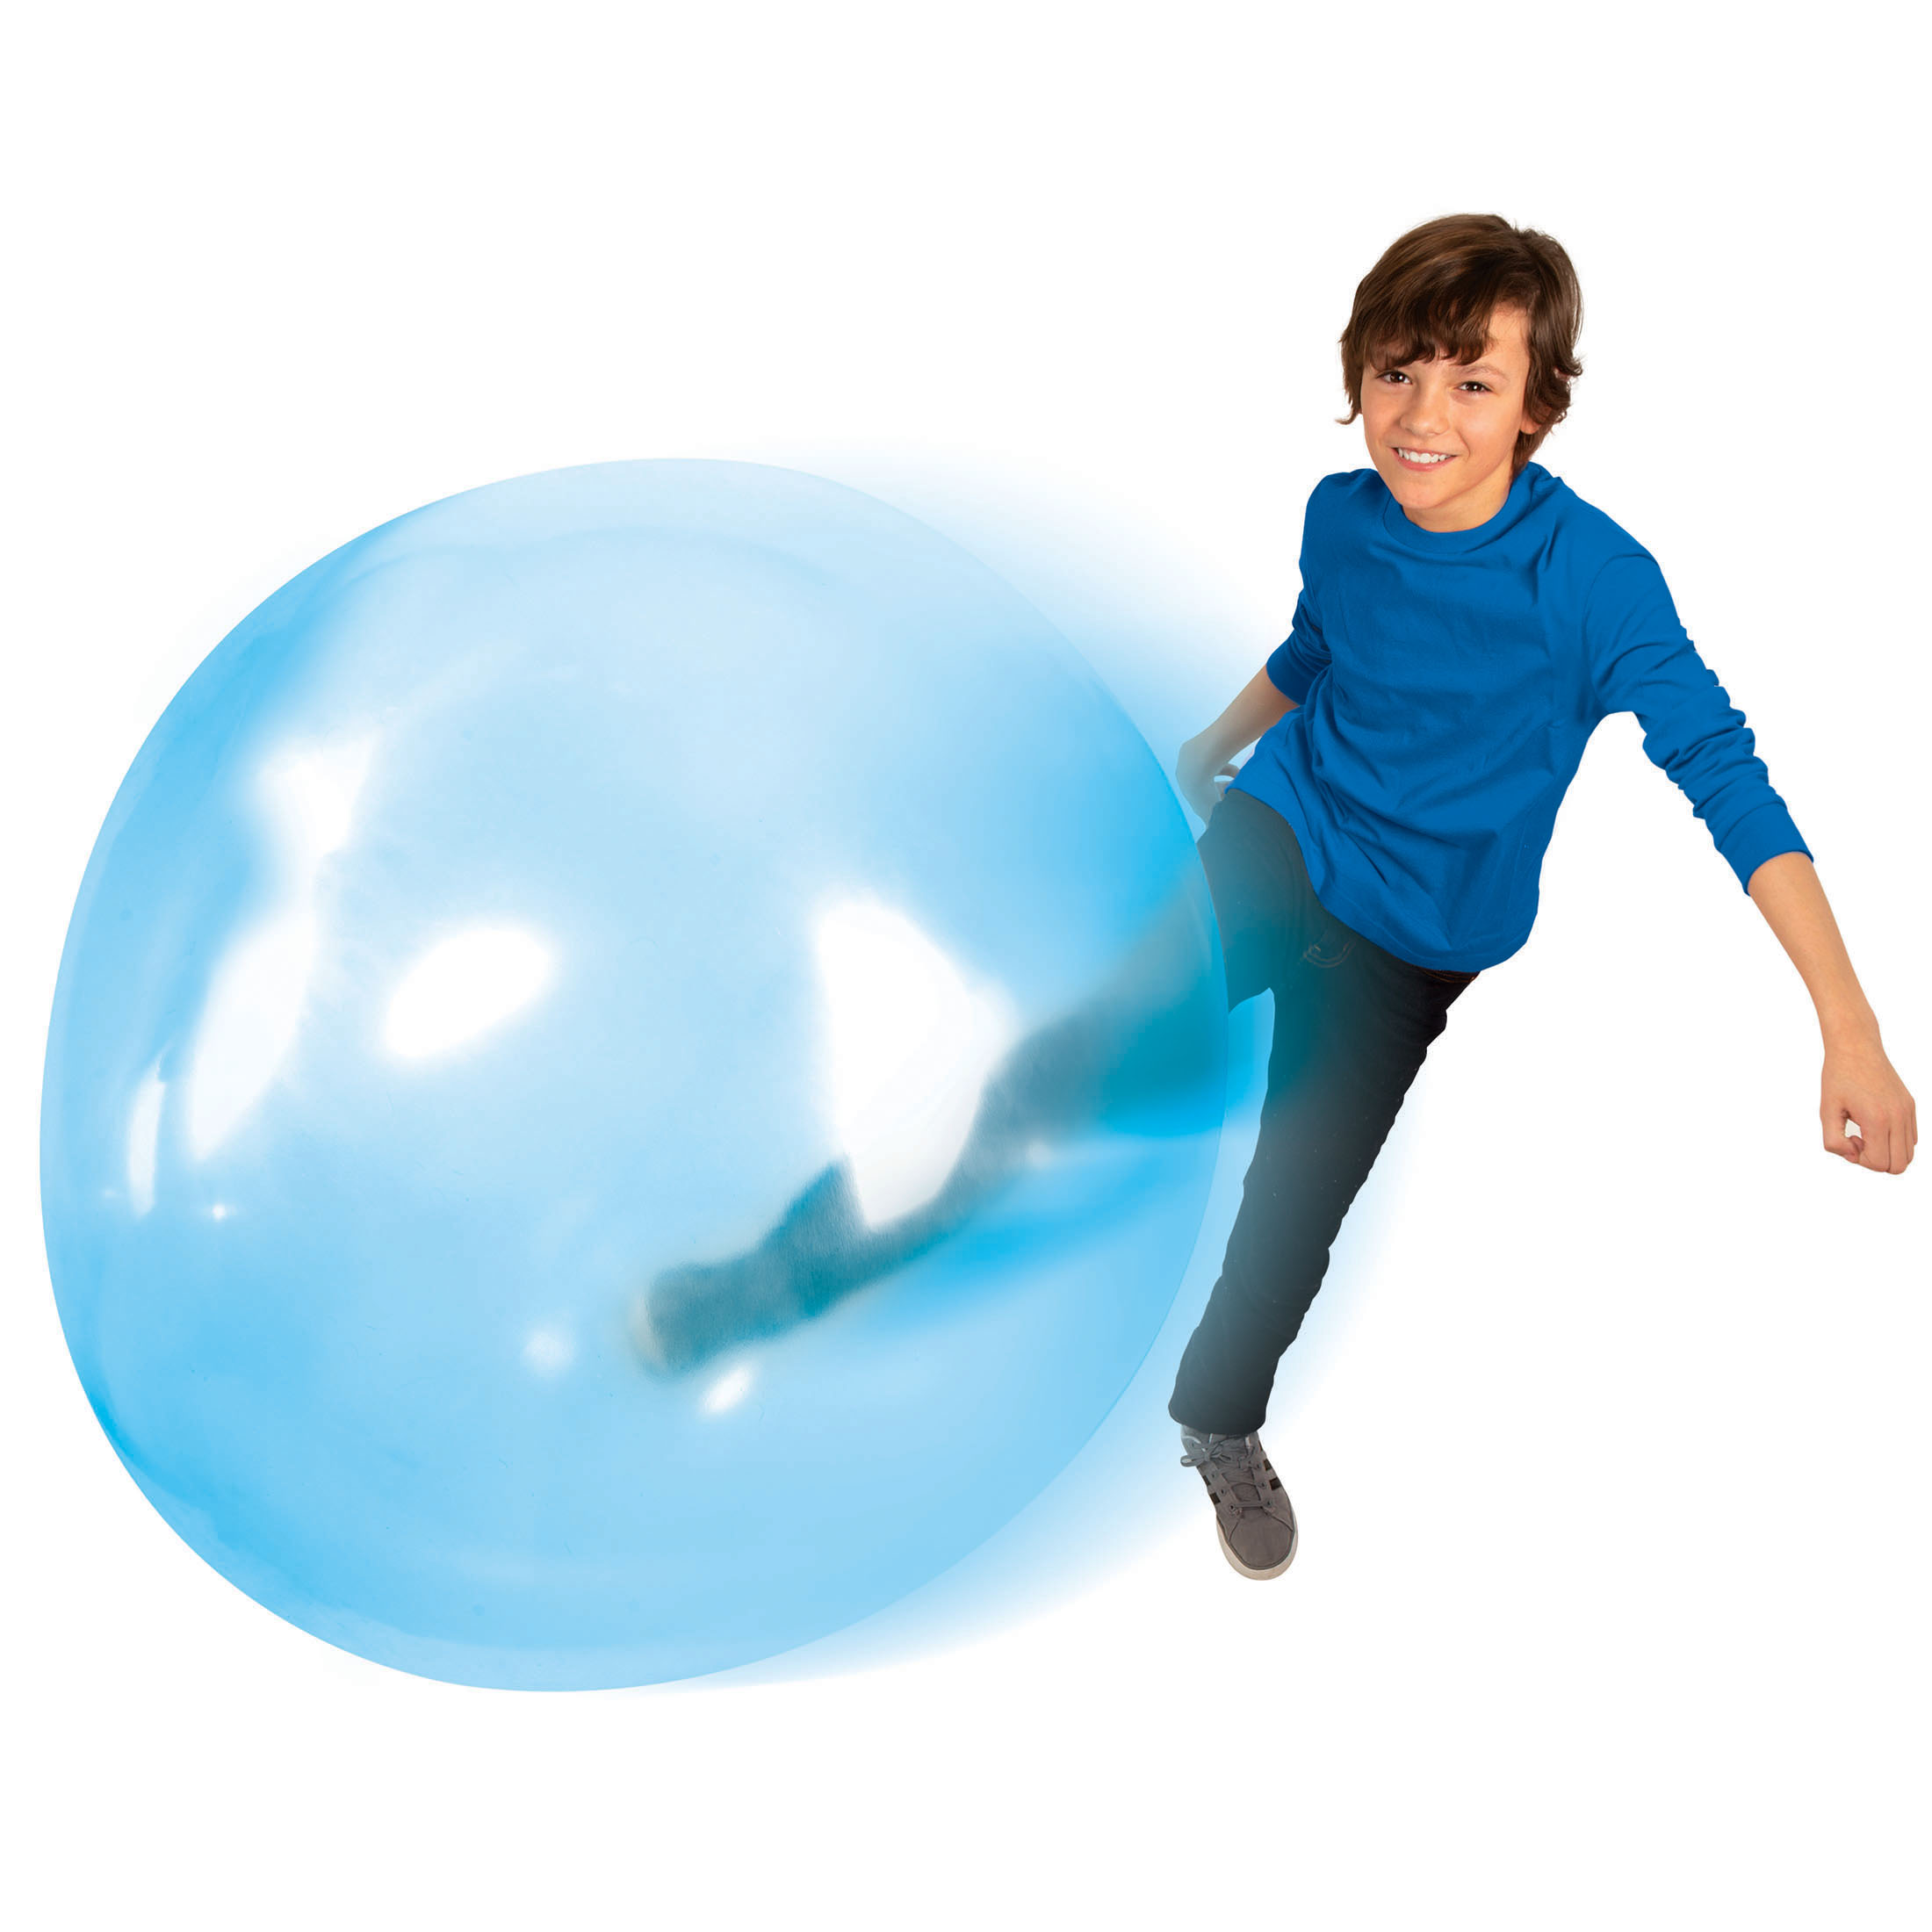 Super Wubble Bubble Ball - Blue - image 3 of 16